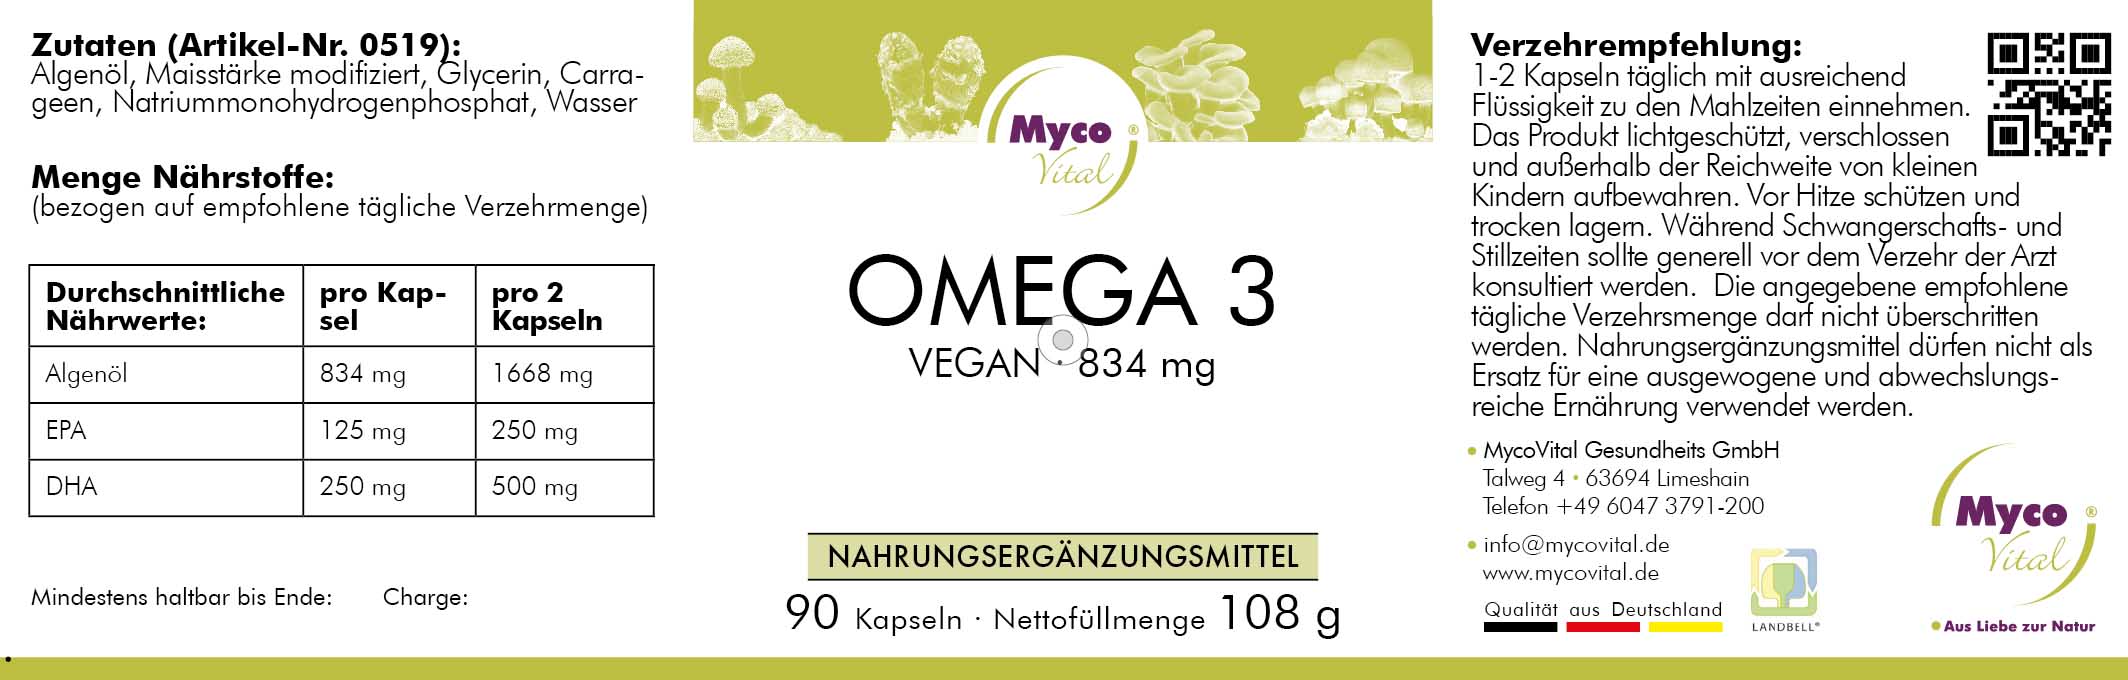 MycoVital Omega 3 VEG Algae 834 mg